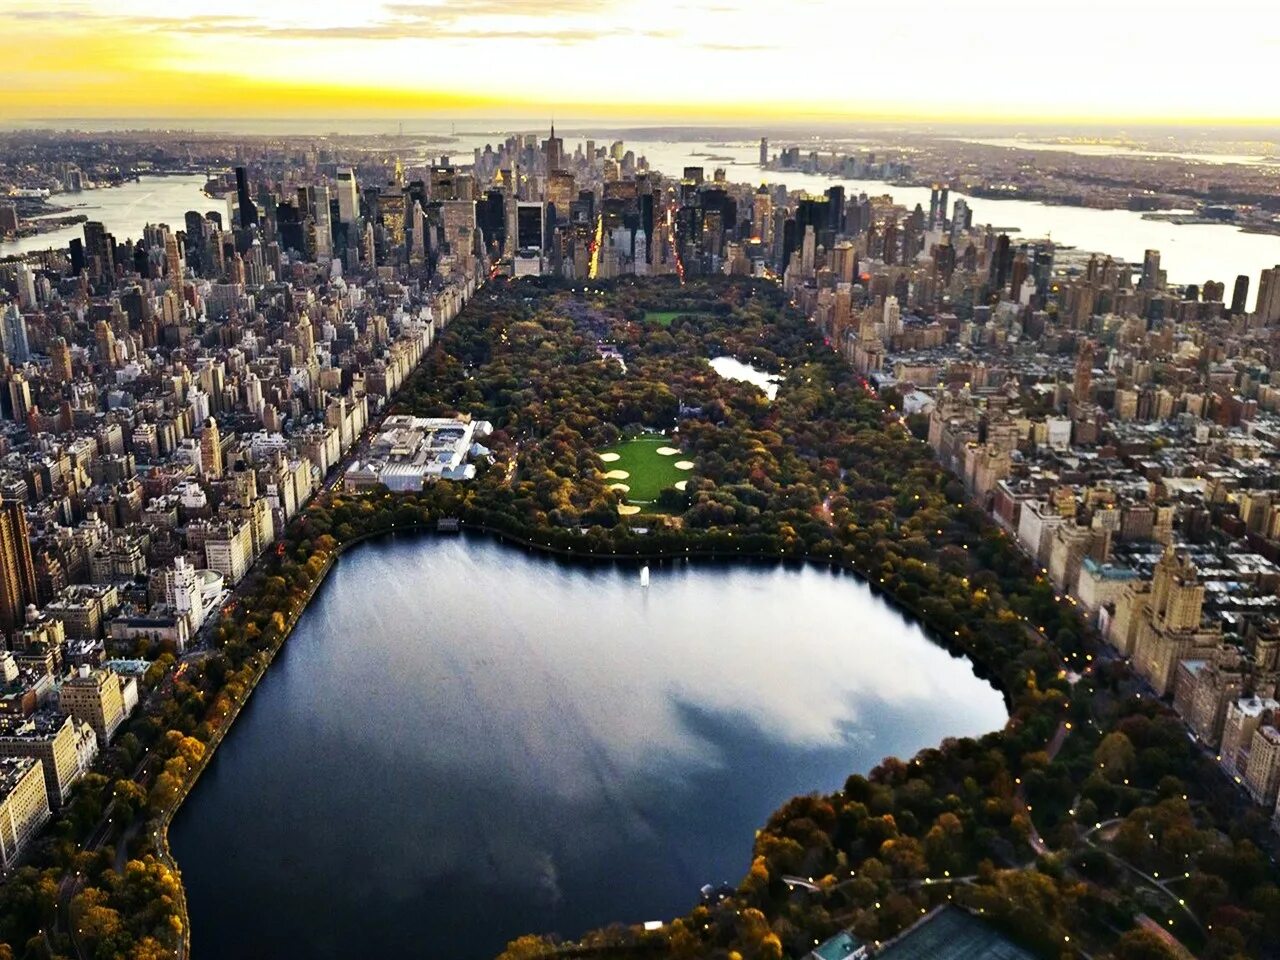 Ковид в сша. Центральный парк Нью-Йорк. Нью-Йорк Манхэттен Центральный парк. Центральный парк Нью-Йорка вид сверху. Панорама централ парк Нью Йорк.